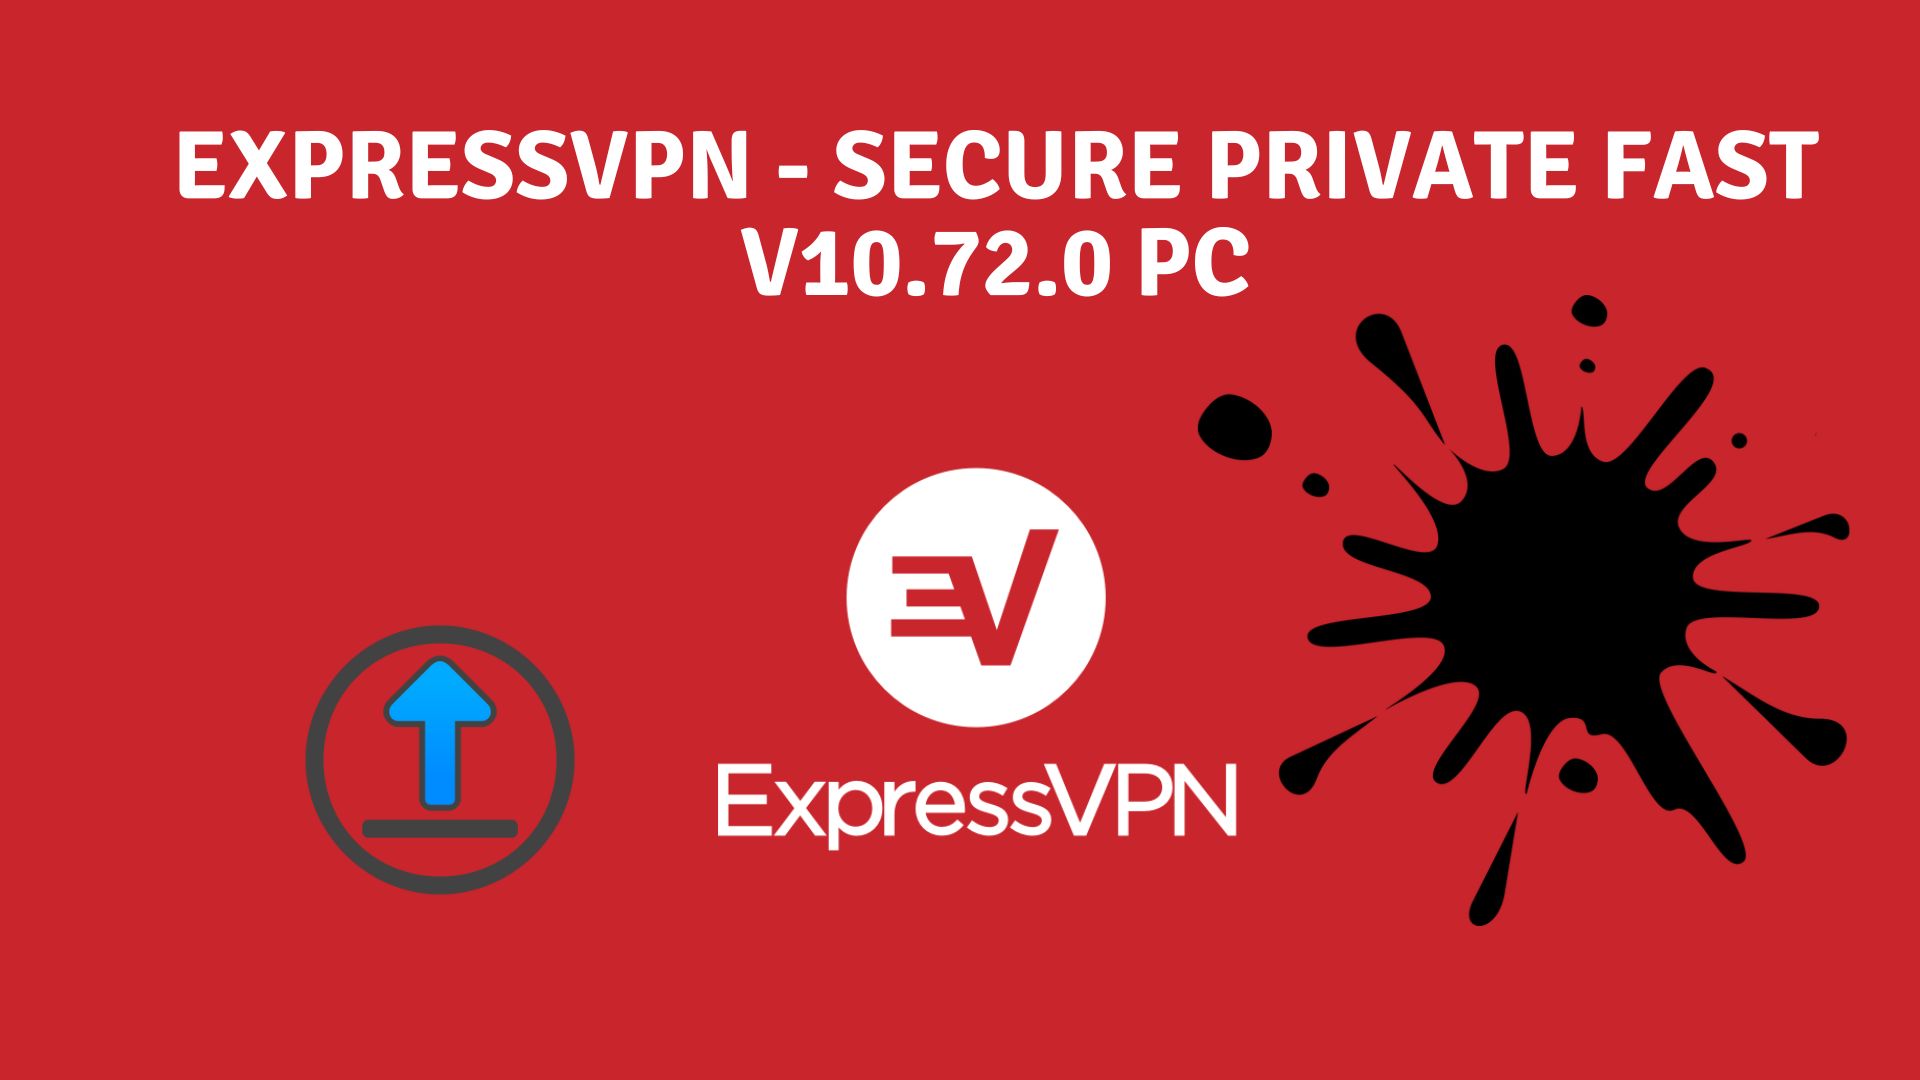 Expressvpn - secure private fast v10. 72. 0 pc